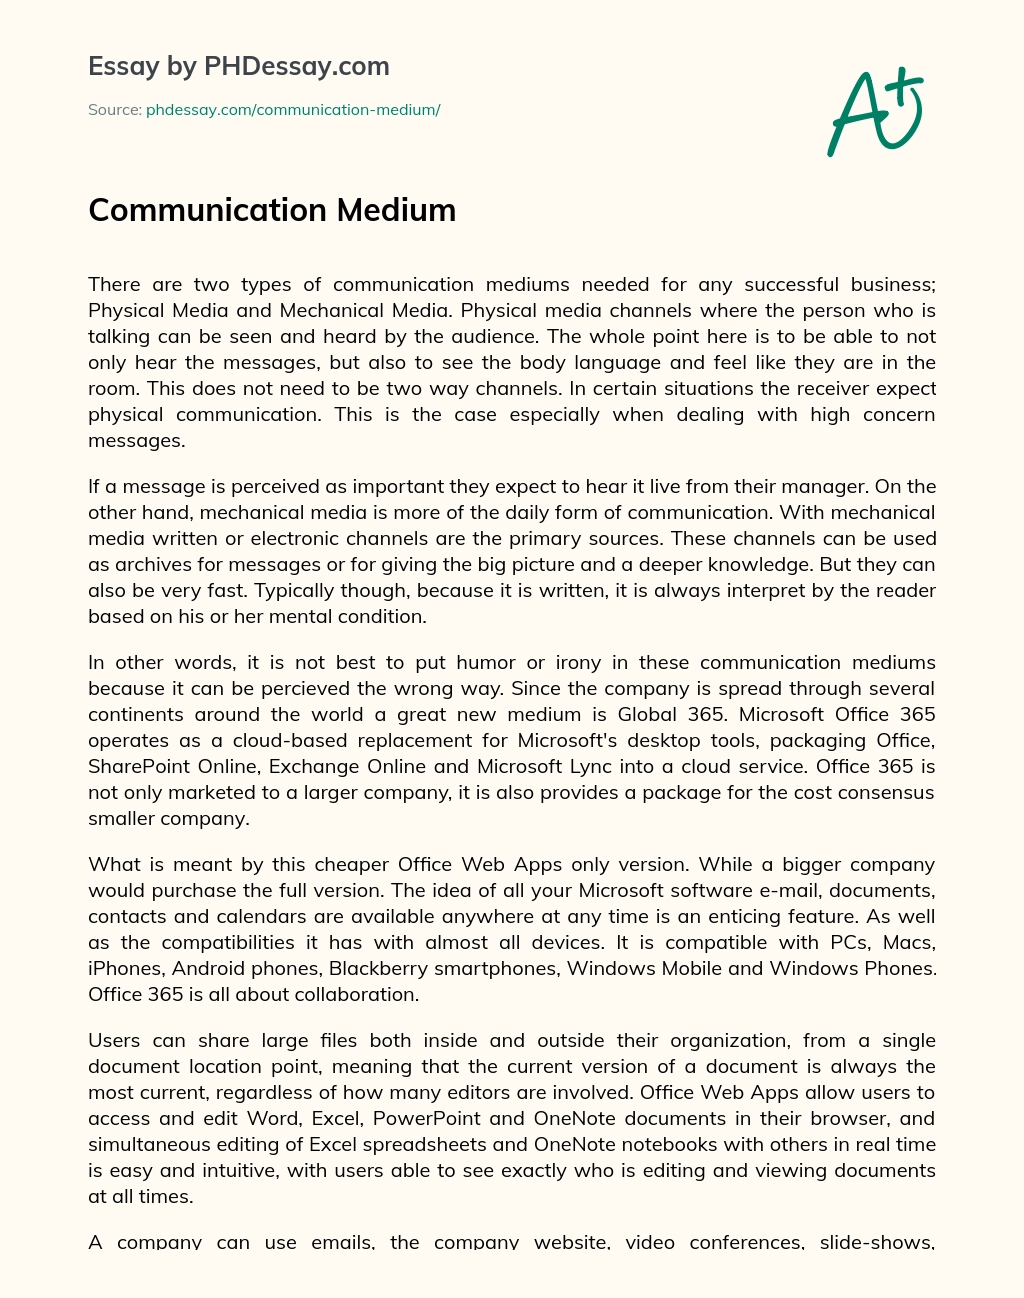 Communication Medium essay